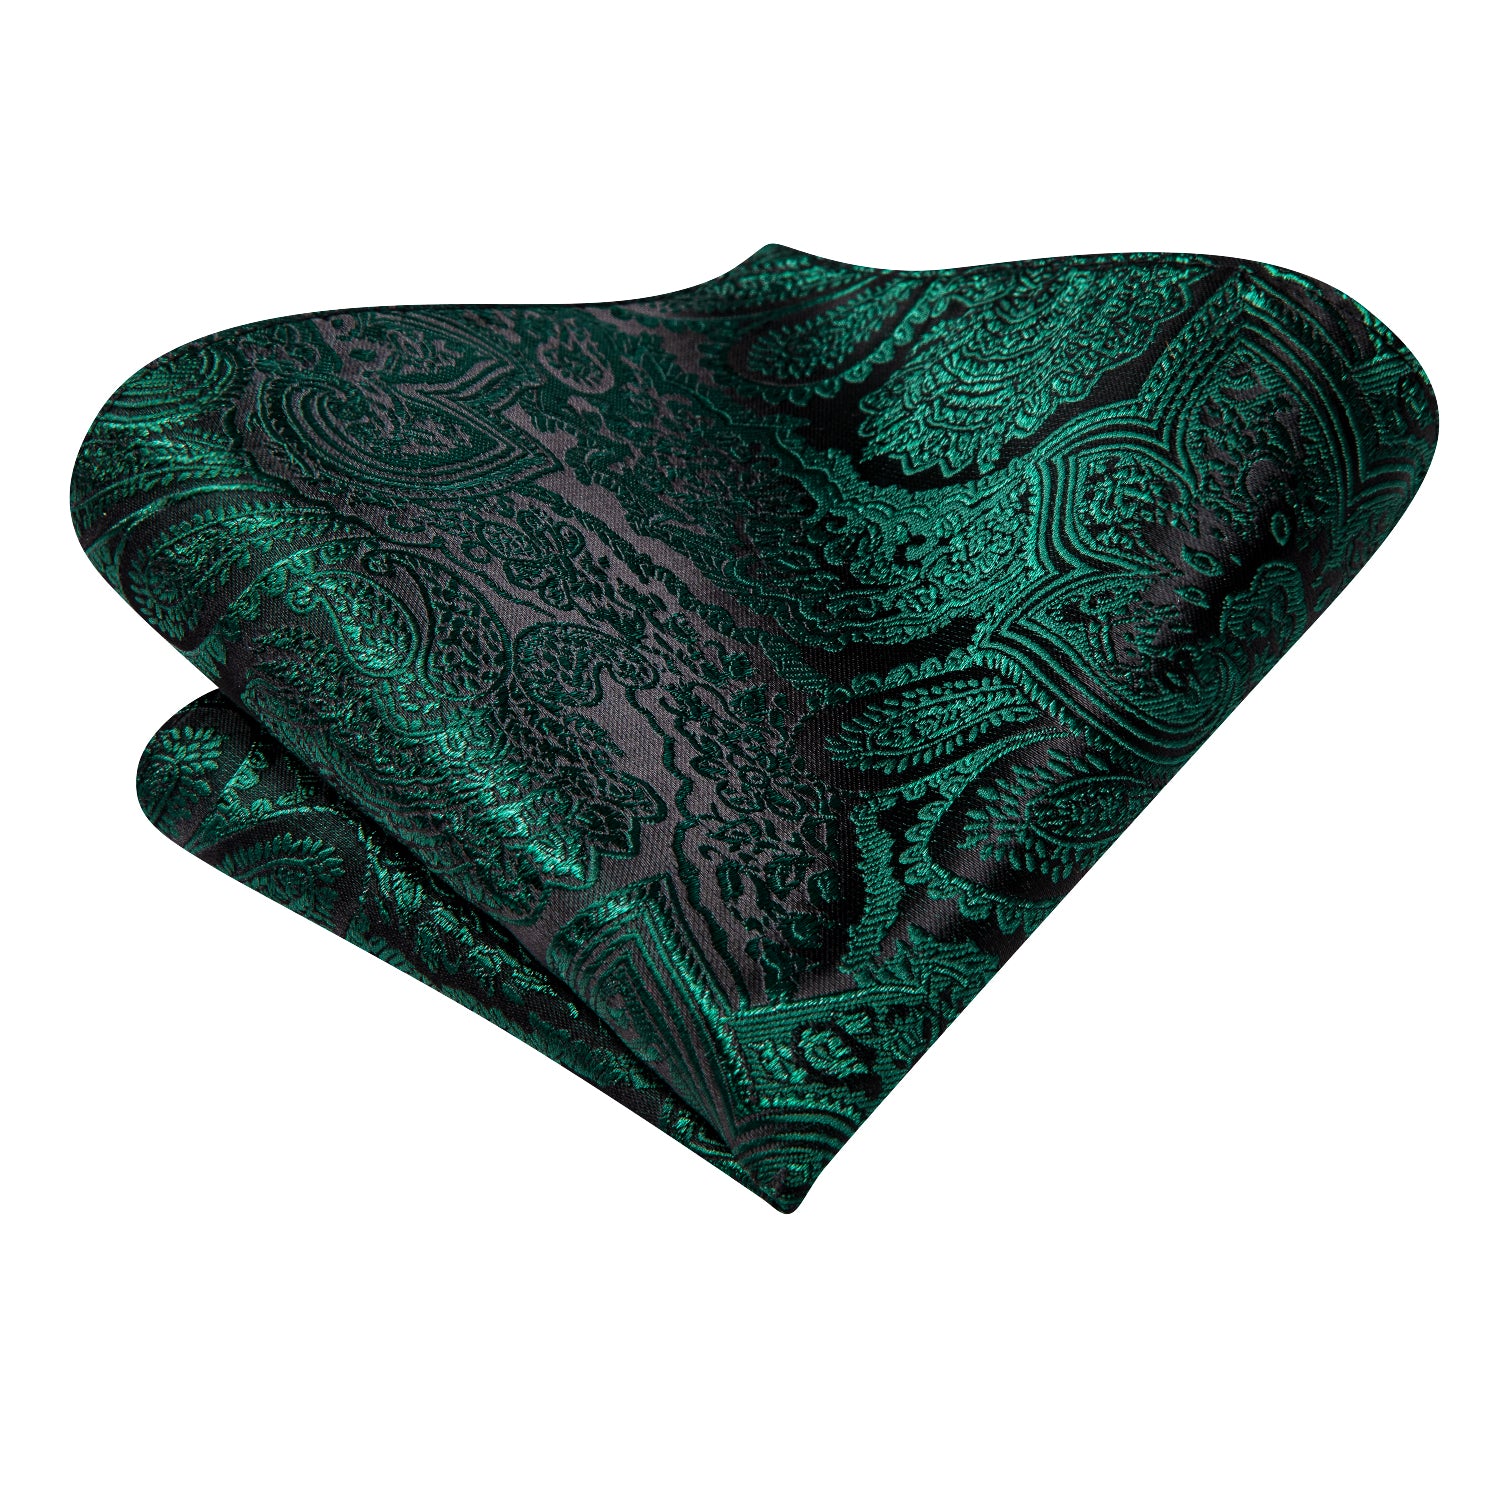 Hi-Tie Dark Green Paisley Men's Tie Pocket Square Cufflinks Set